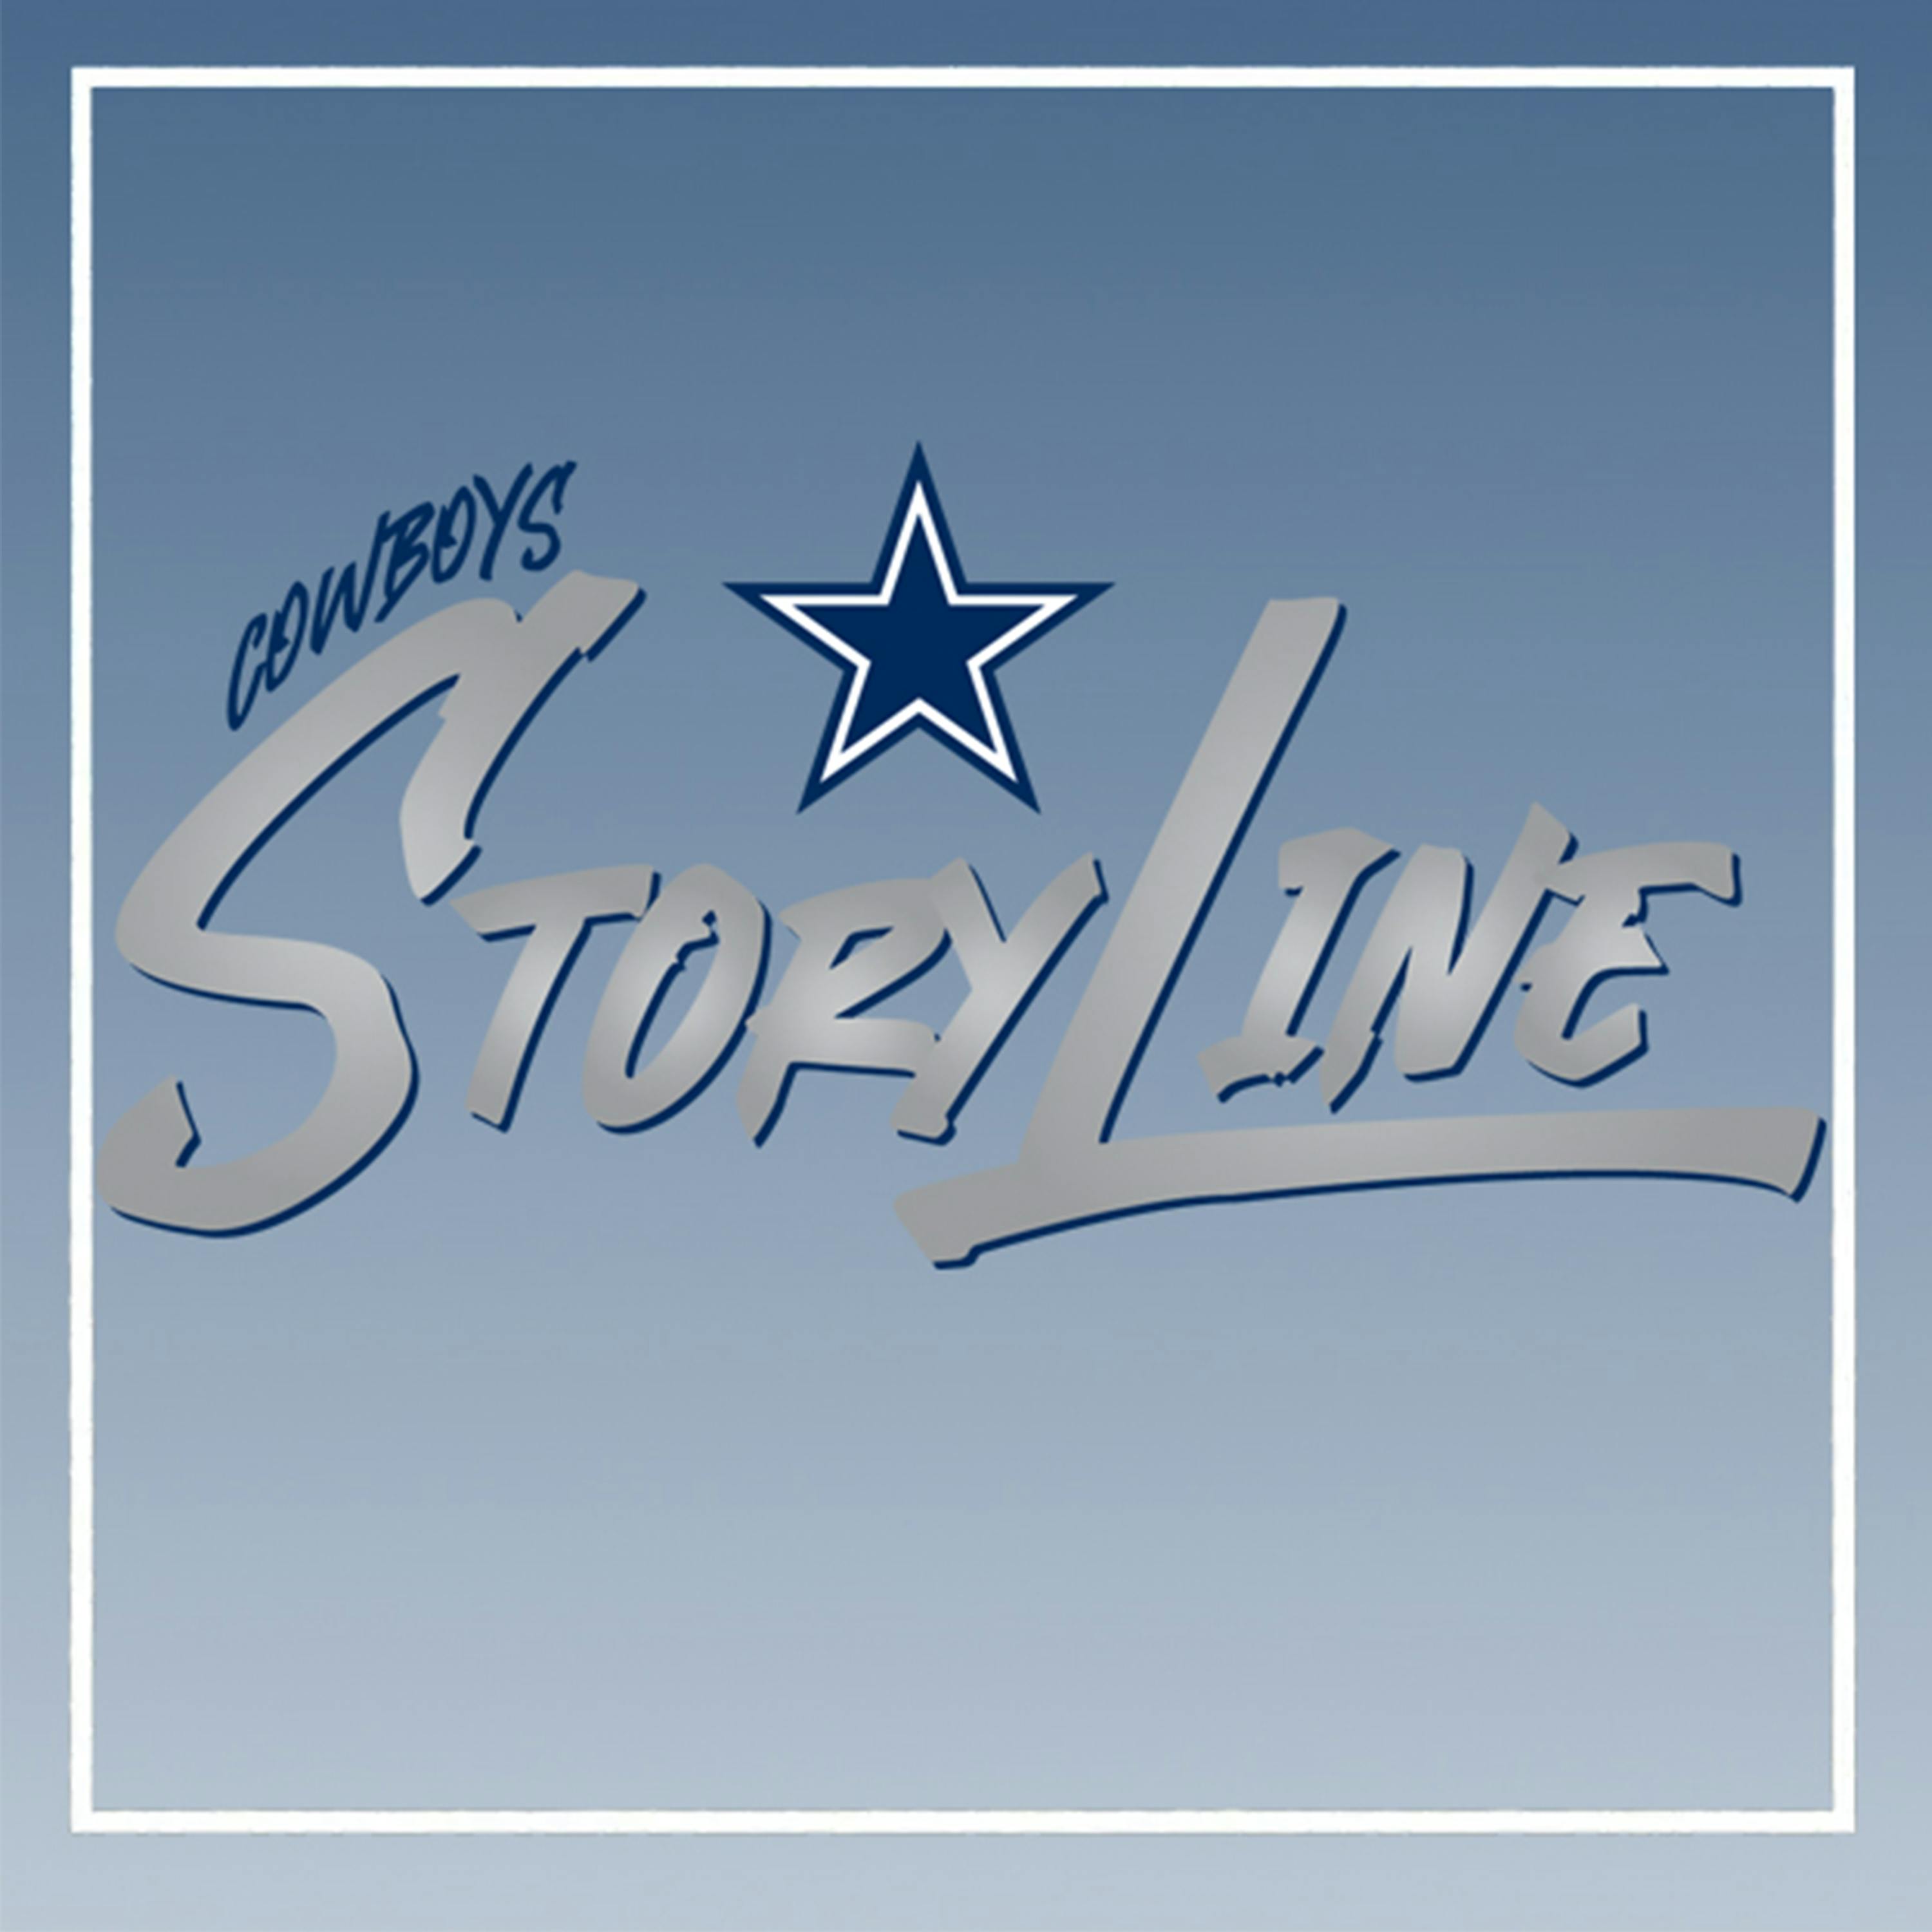 Cowboys StoryLine